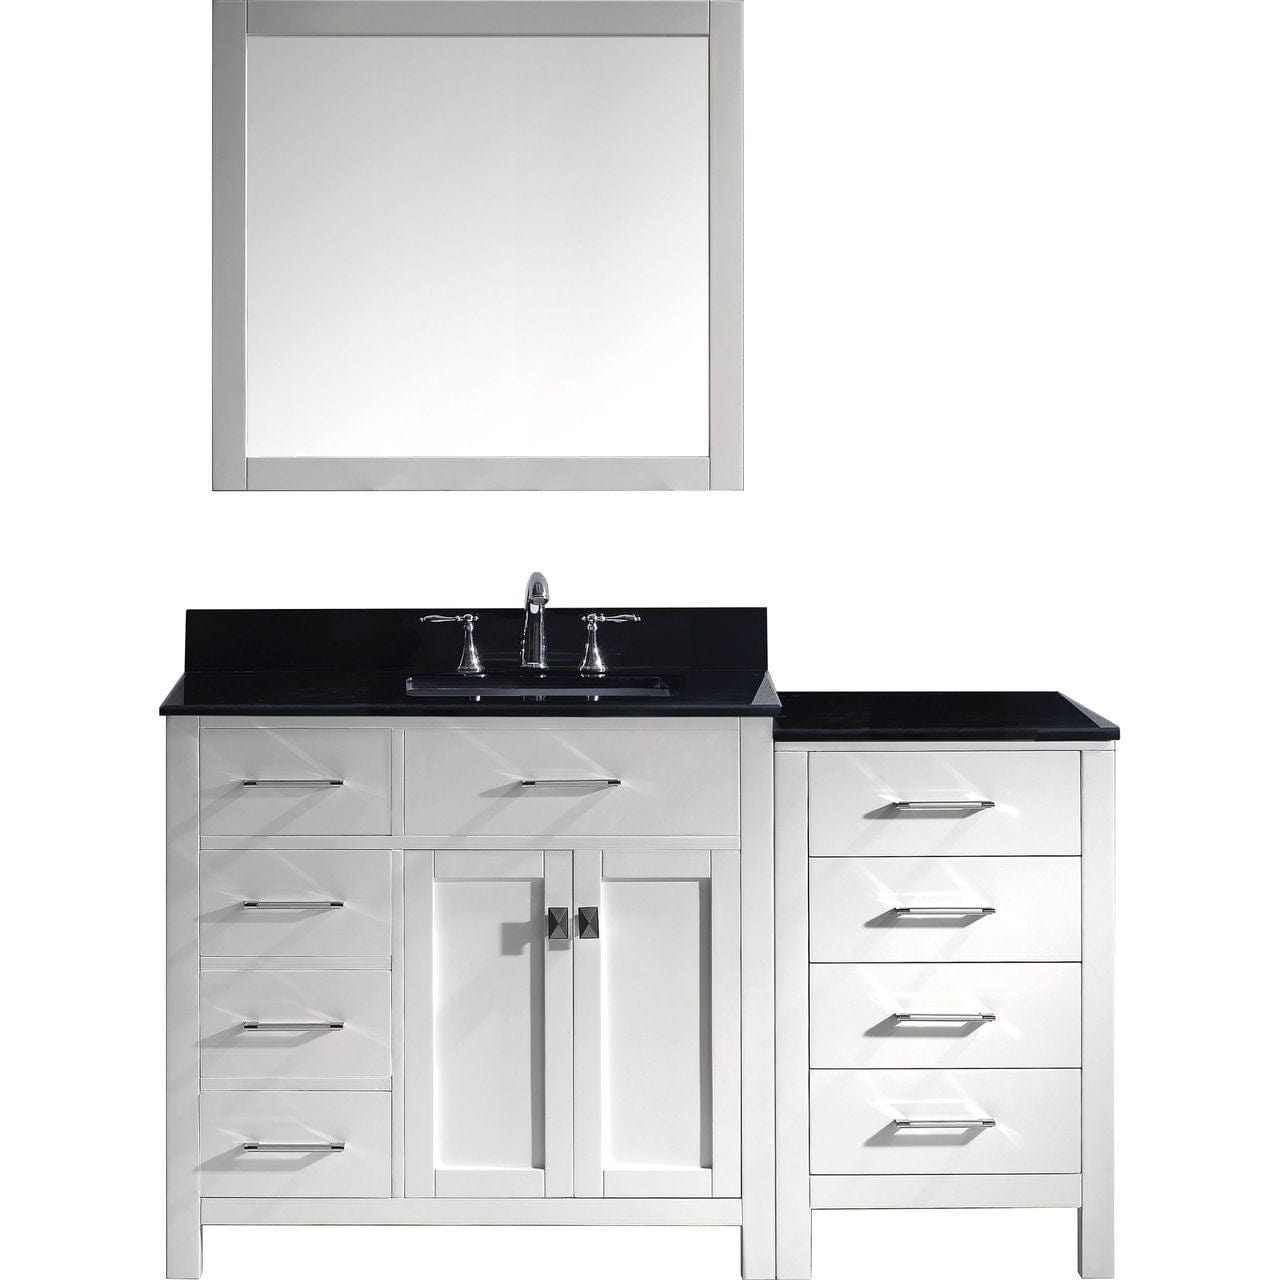 Virtu USA Caroline Parkway 57" Single Bathroom Vanity Set in White w/ Black Galaxy Granite Counter-Top | Square Basin